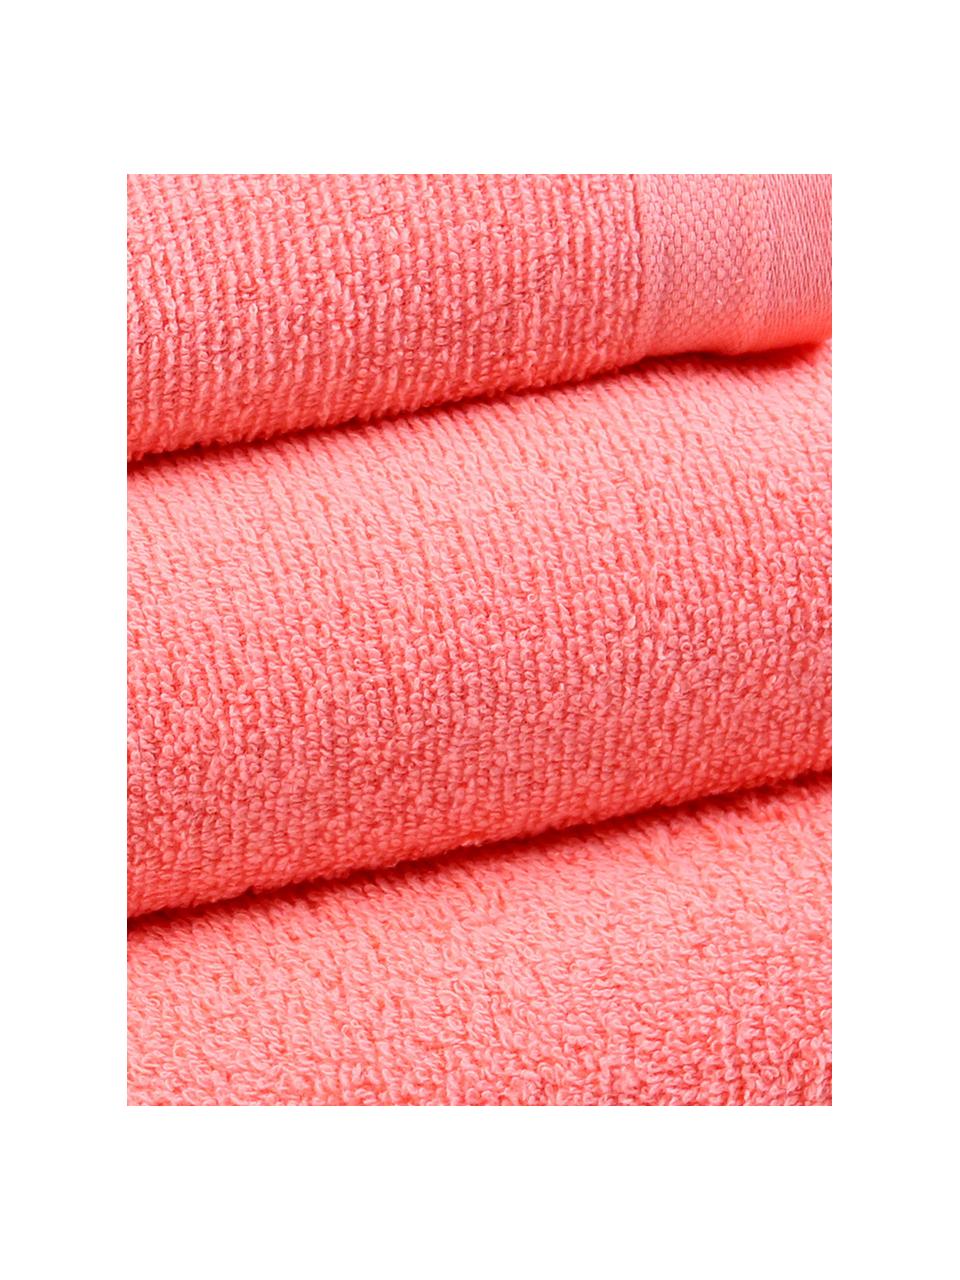 Set de toallas Noa, 3 pzas., 100% algodón
Gramaje superior 450 g/m², Coral, Tamaños diferentes